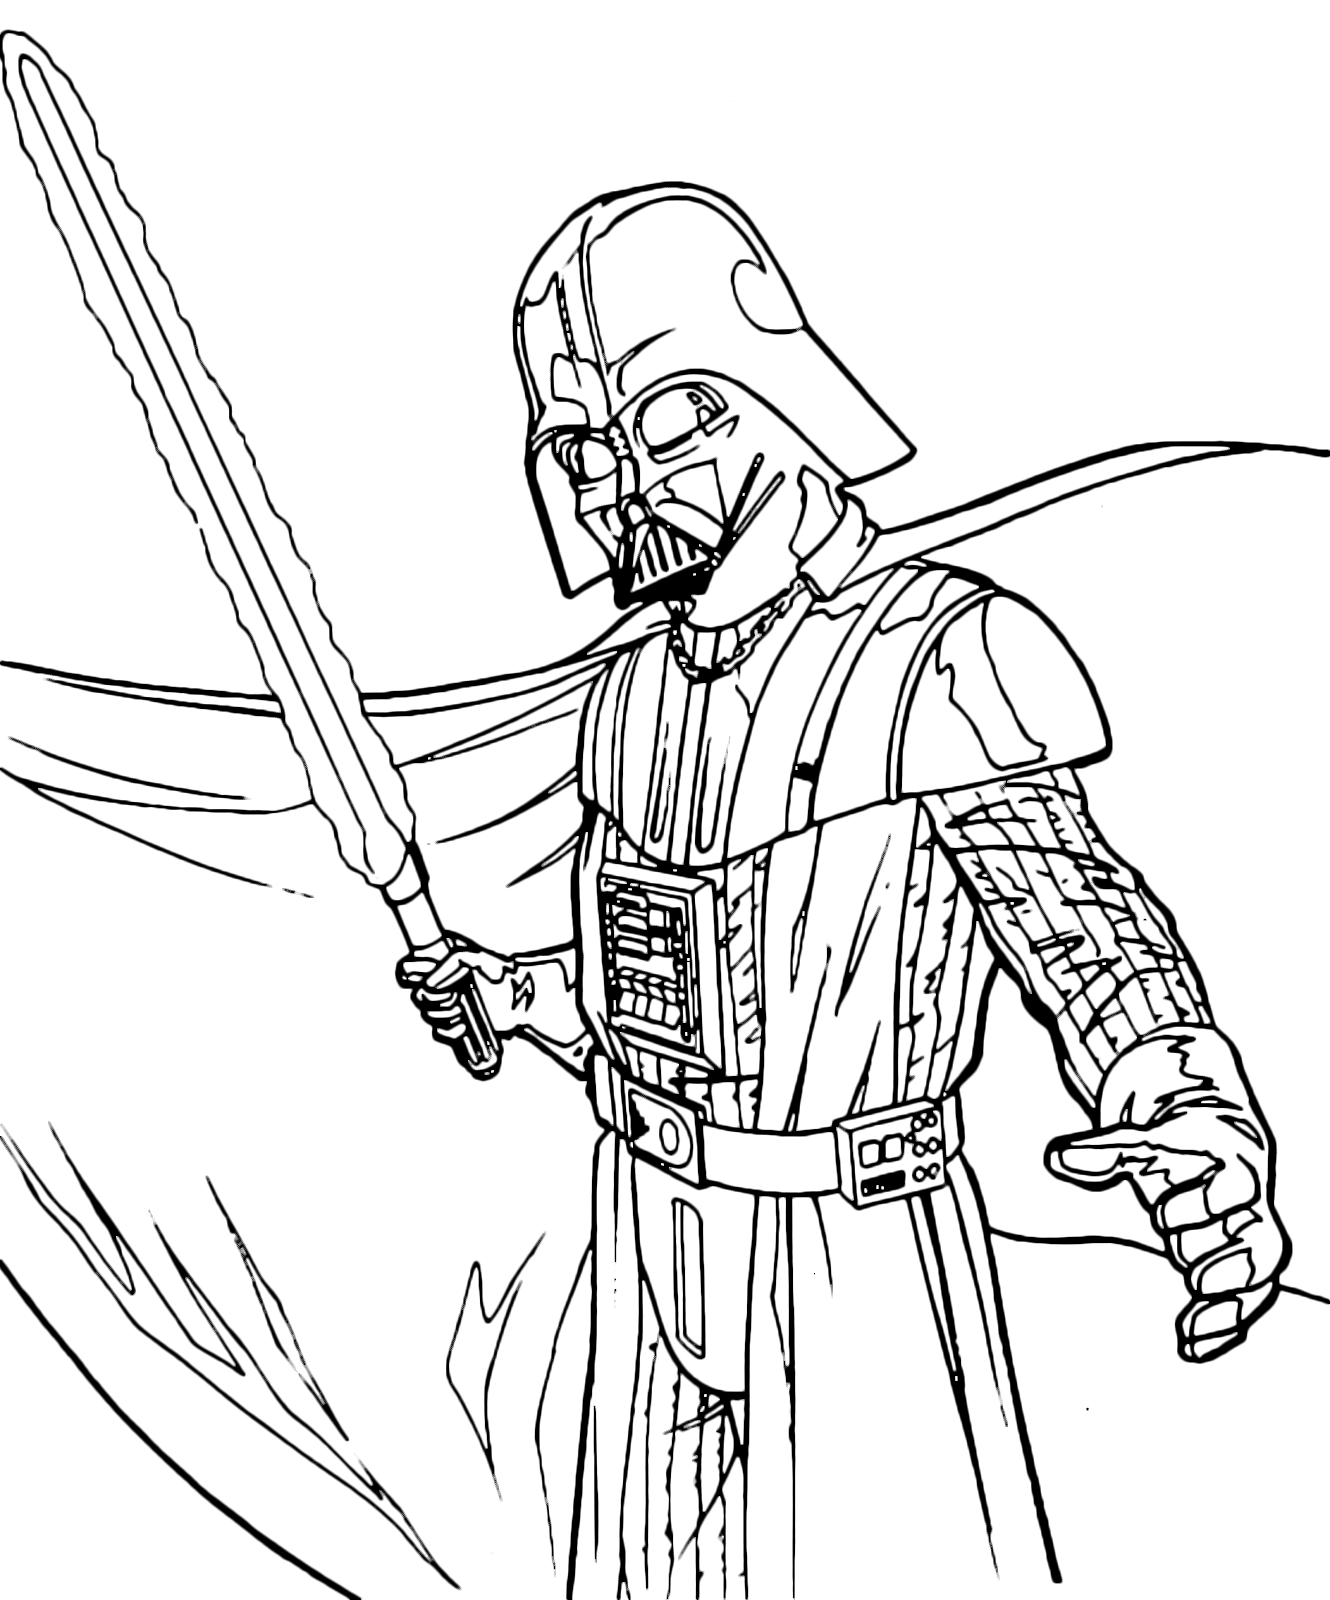 Star Wars - Darth Vader with his lightsaber